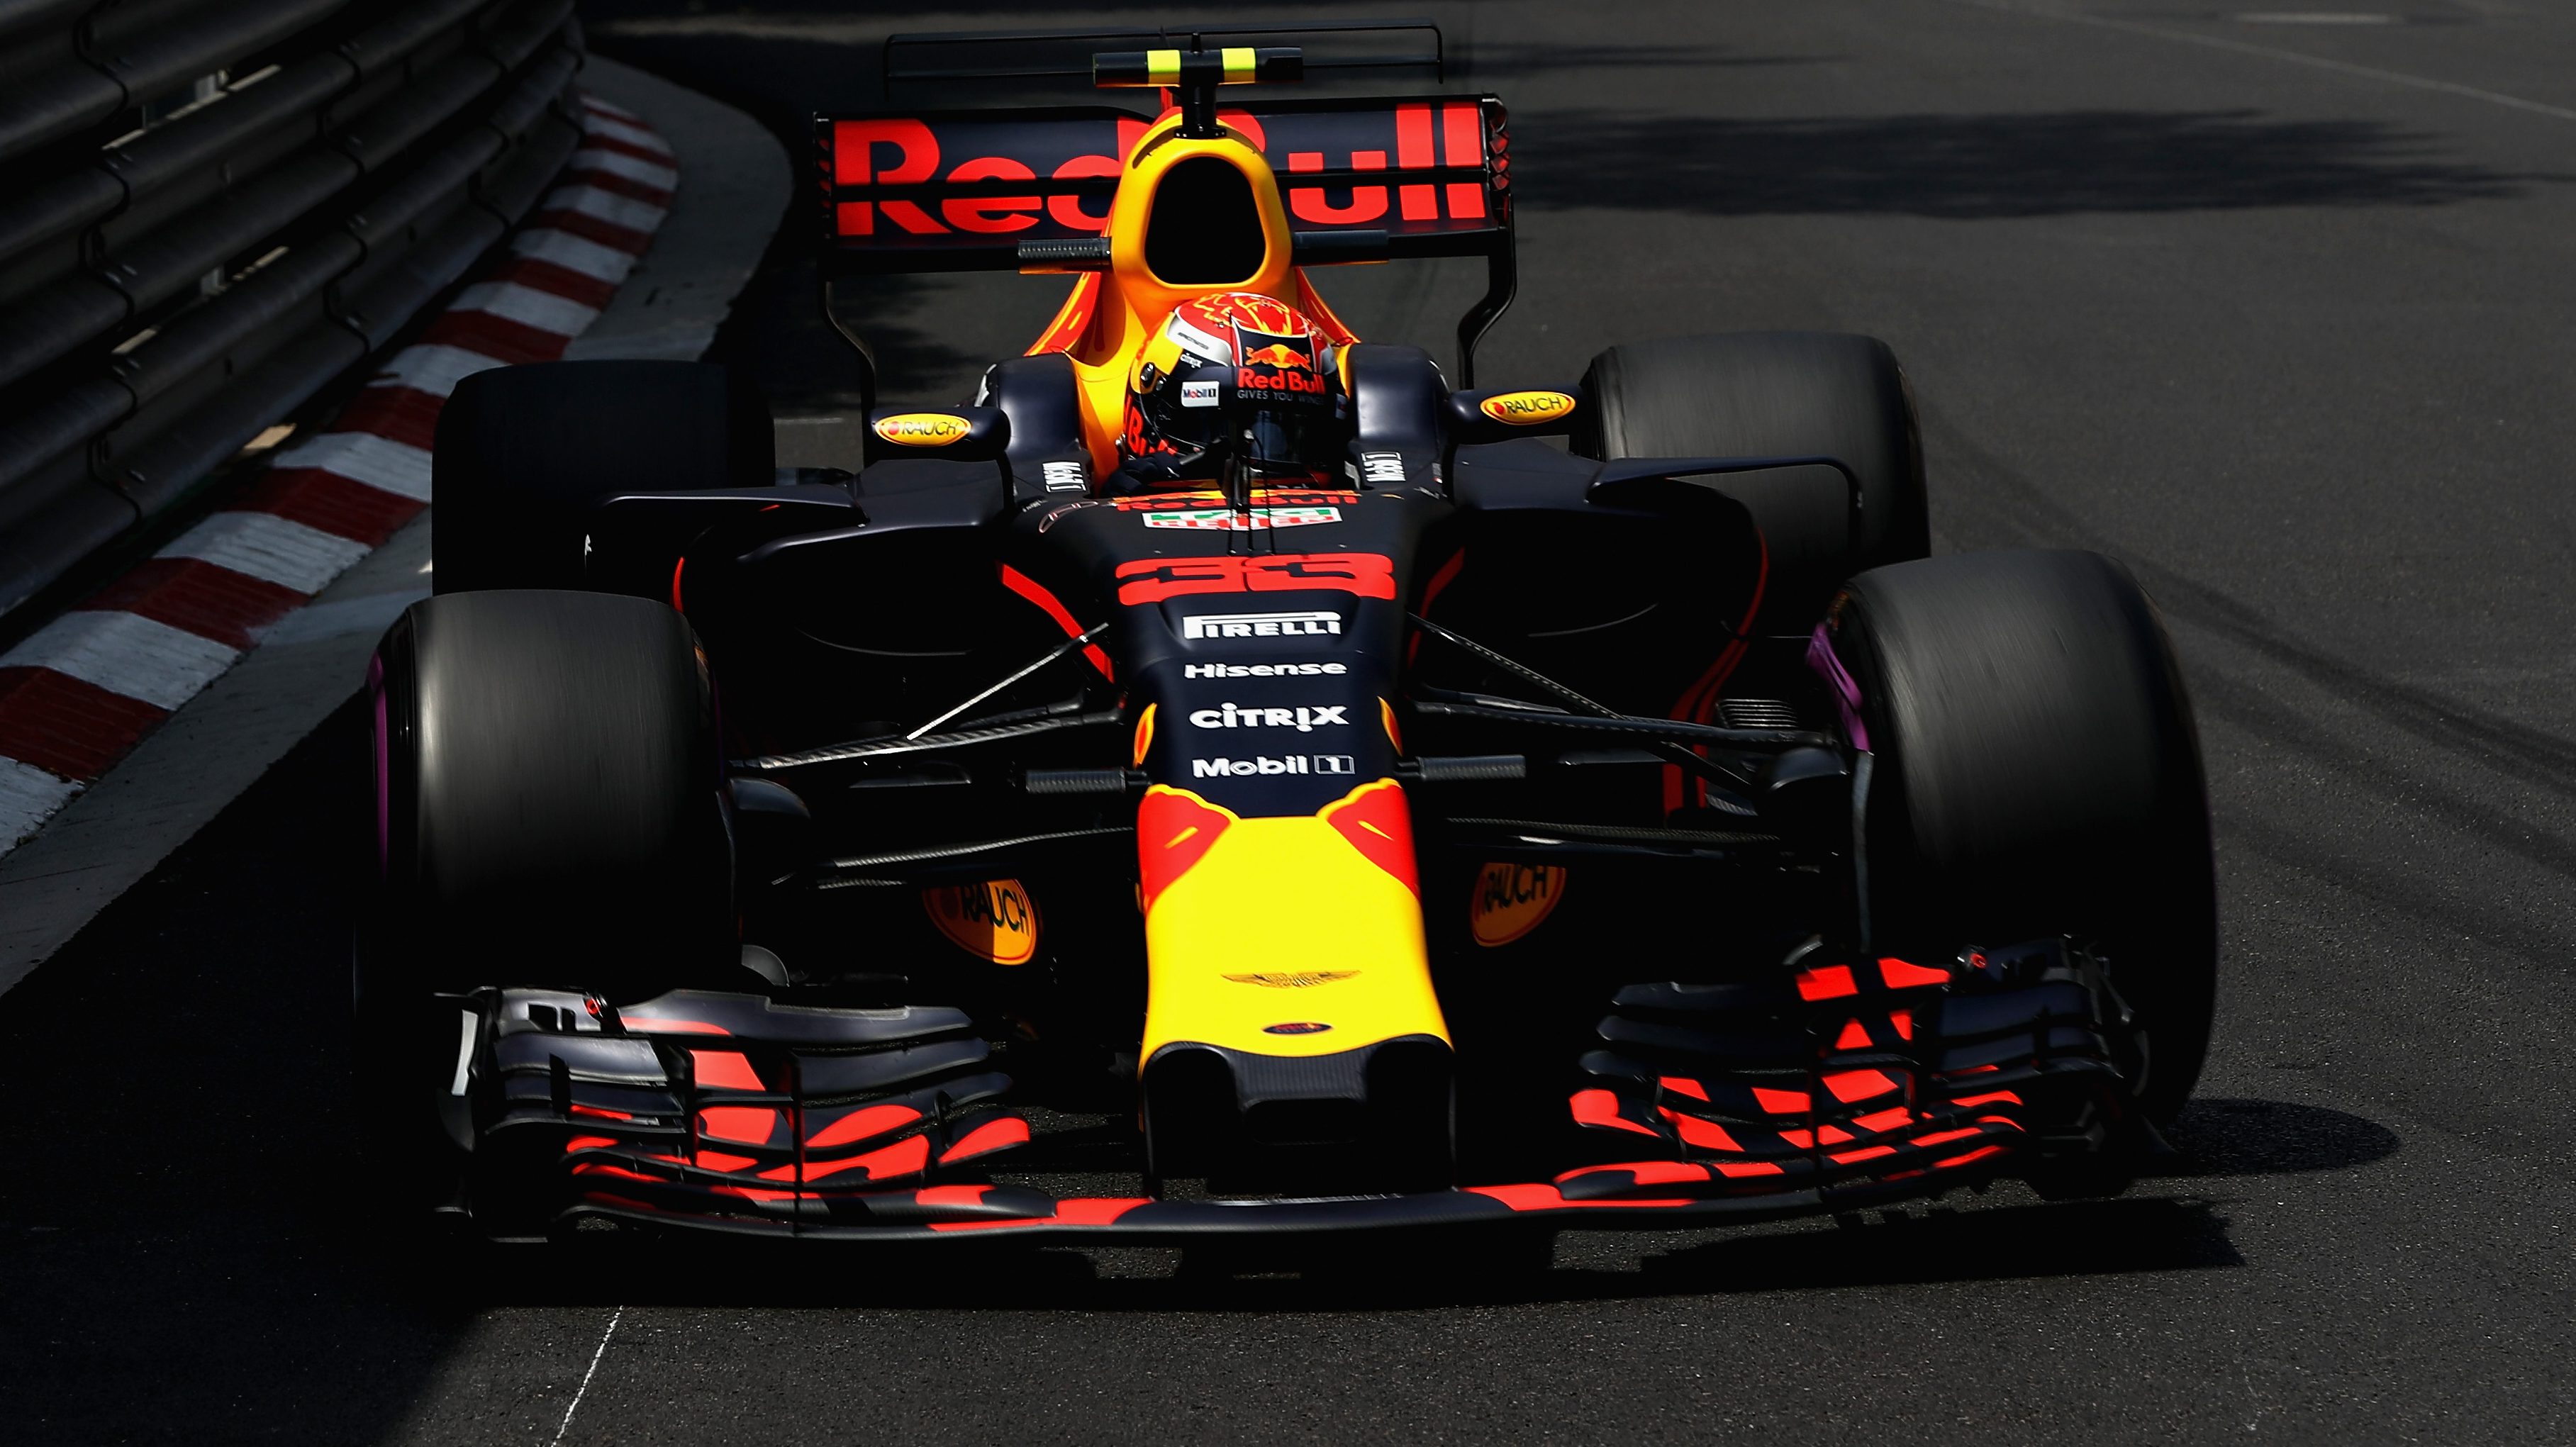 F1 Monaco Grand Prix Live Stream How to Watch Online